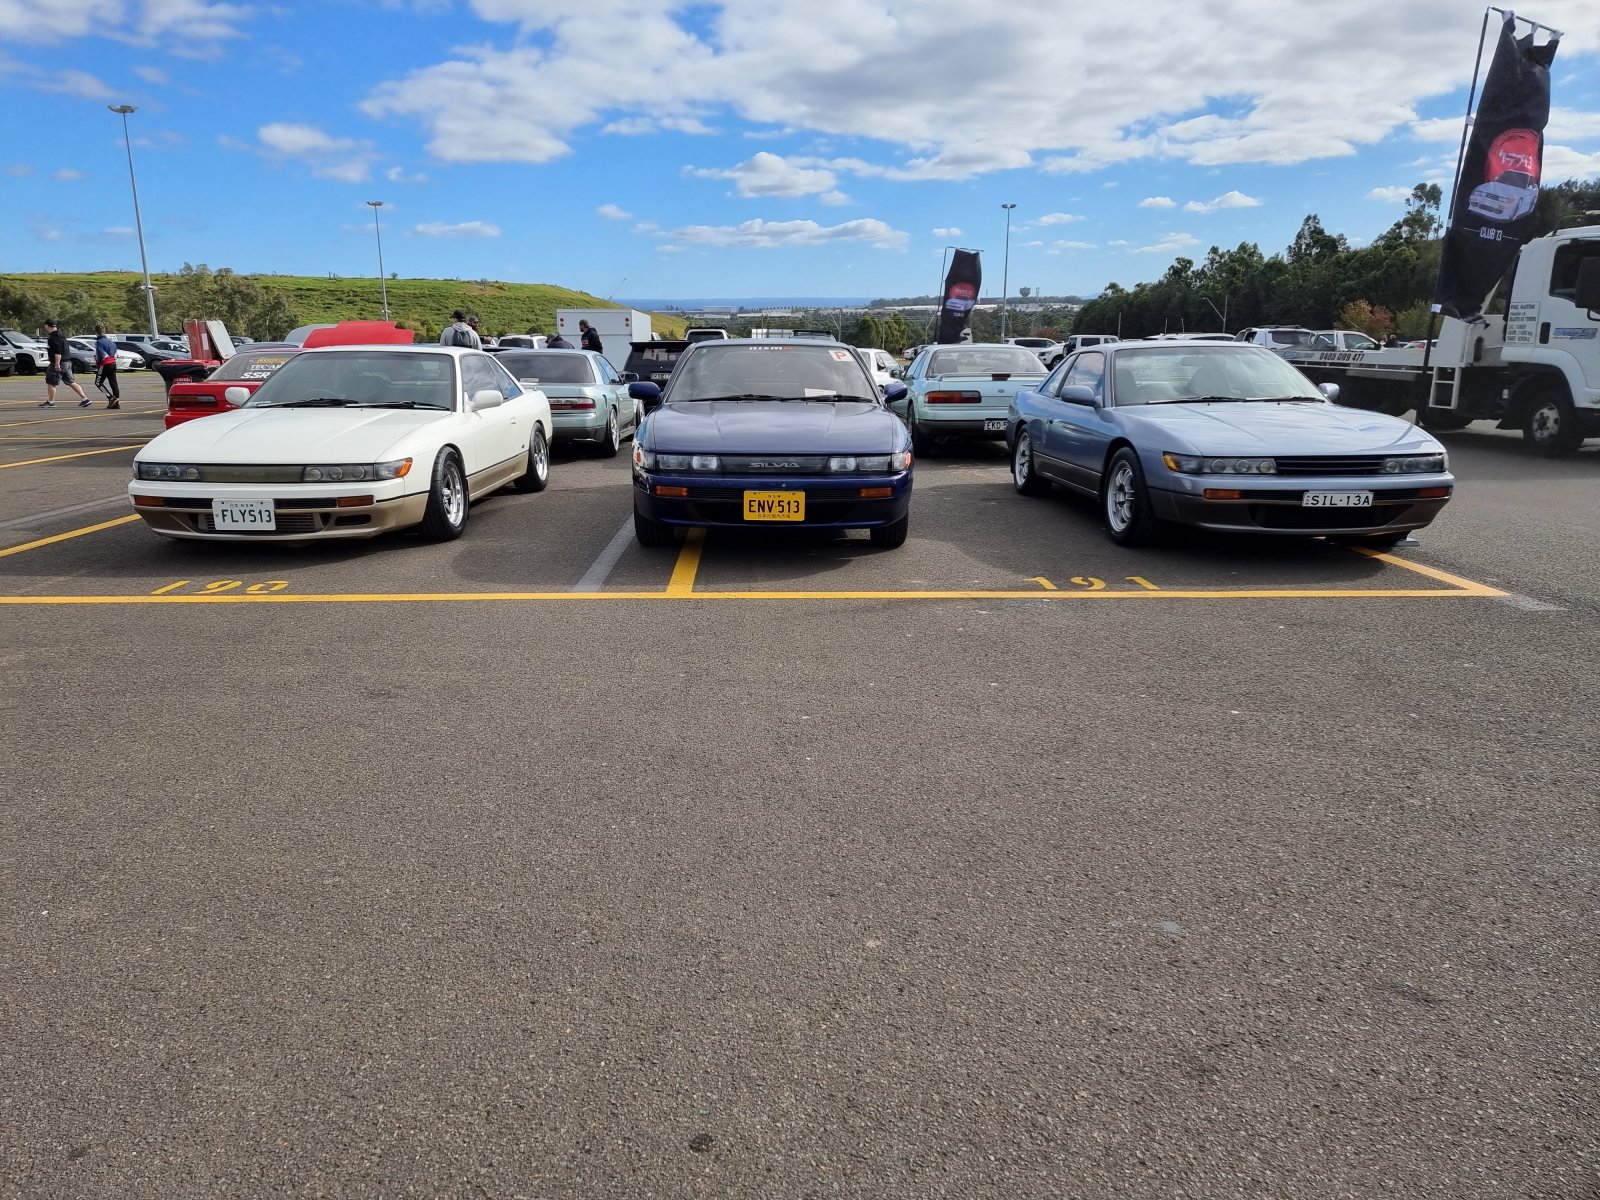 S13 Silvia crew